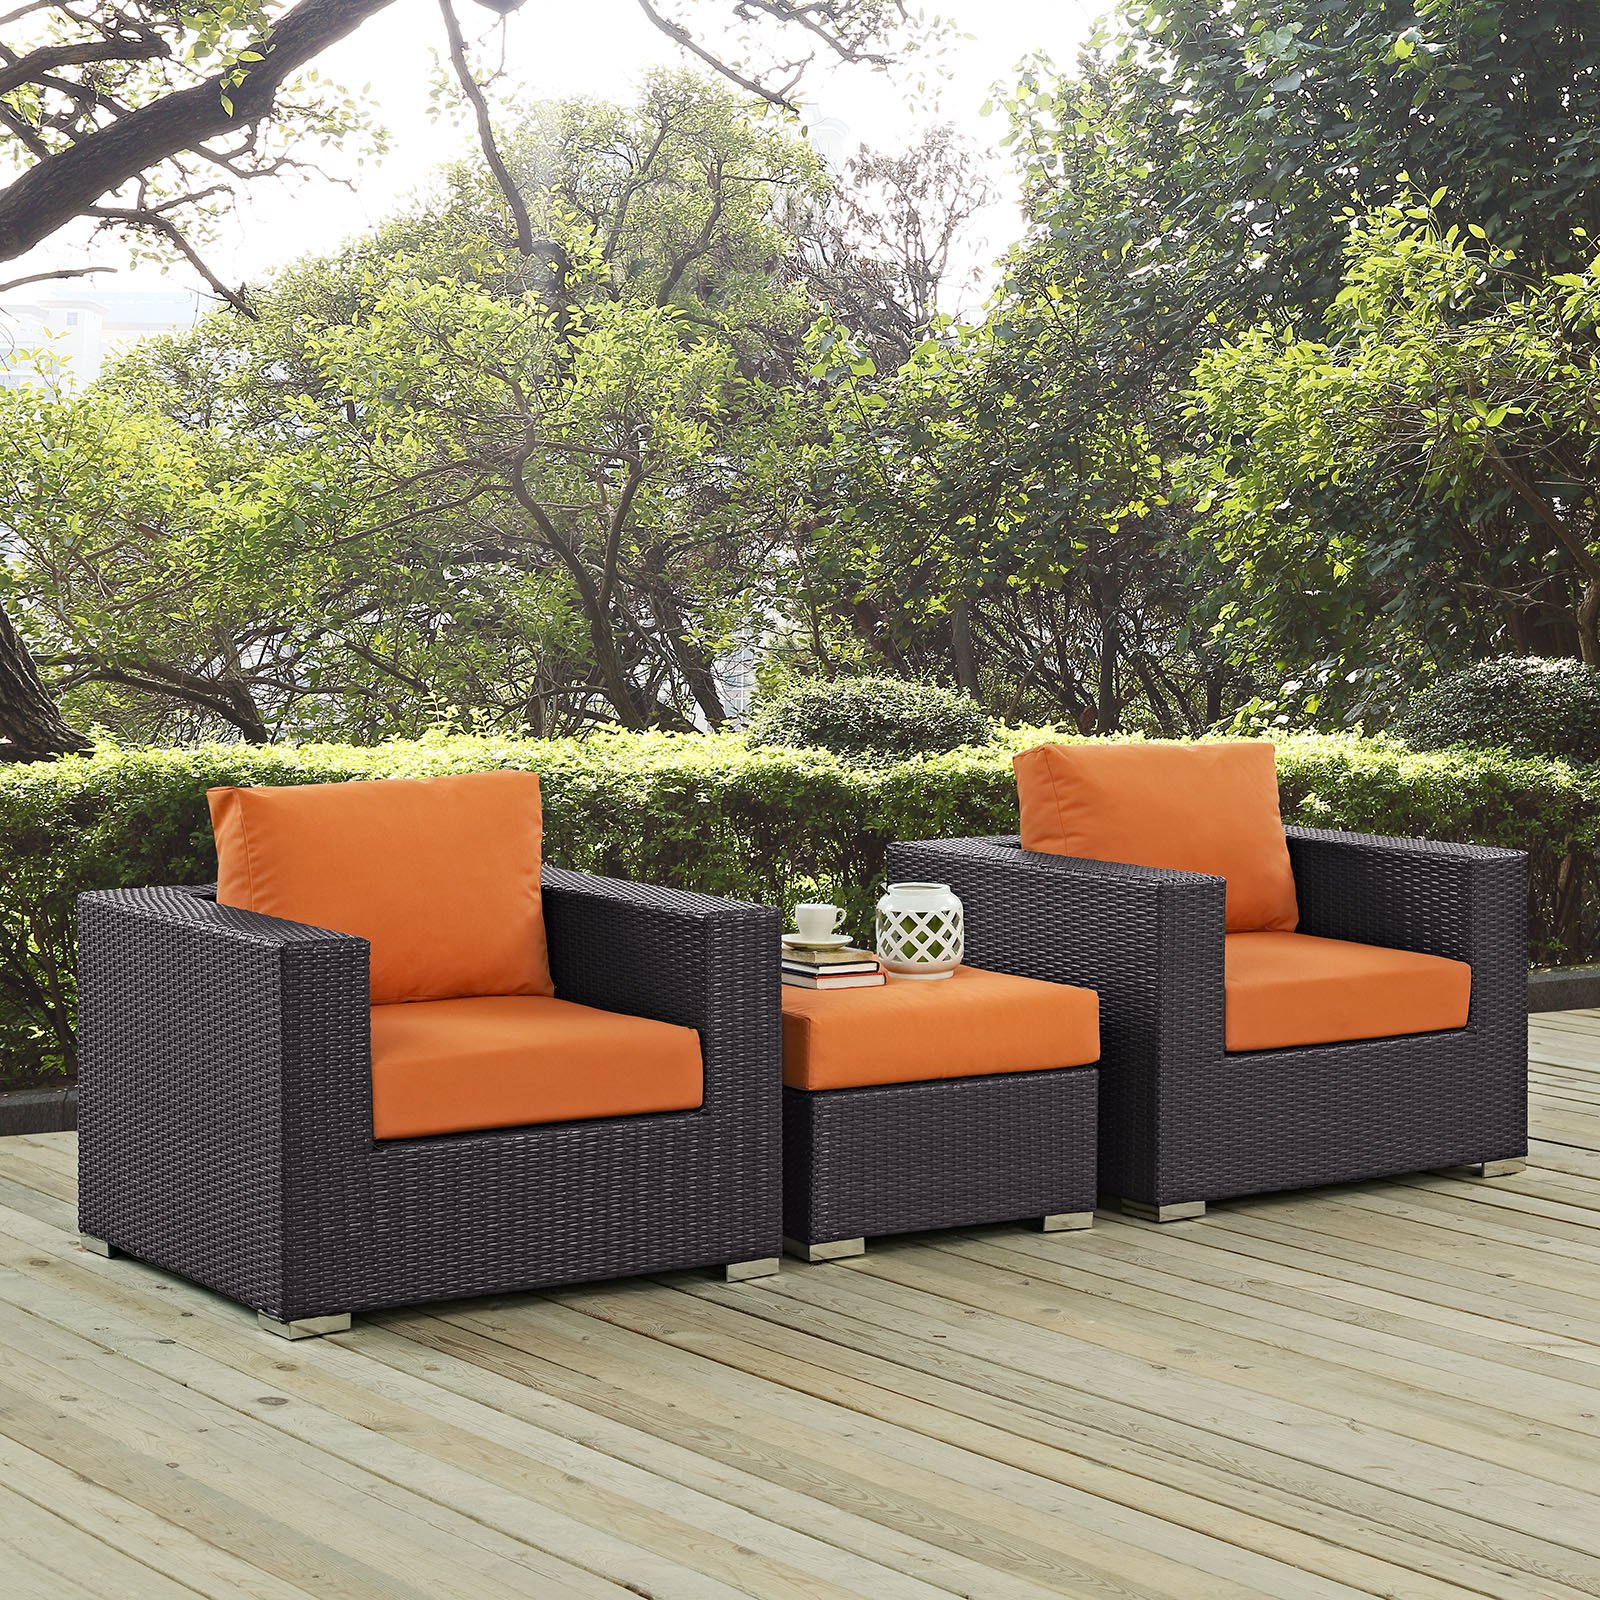 Modway Convene Wicker Rattan 3-Piece Outdoor Patio Furniture Set in Espresso Orange